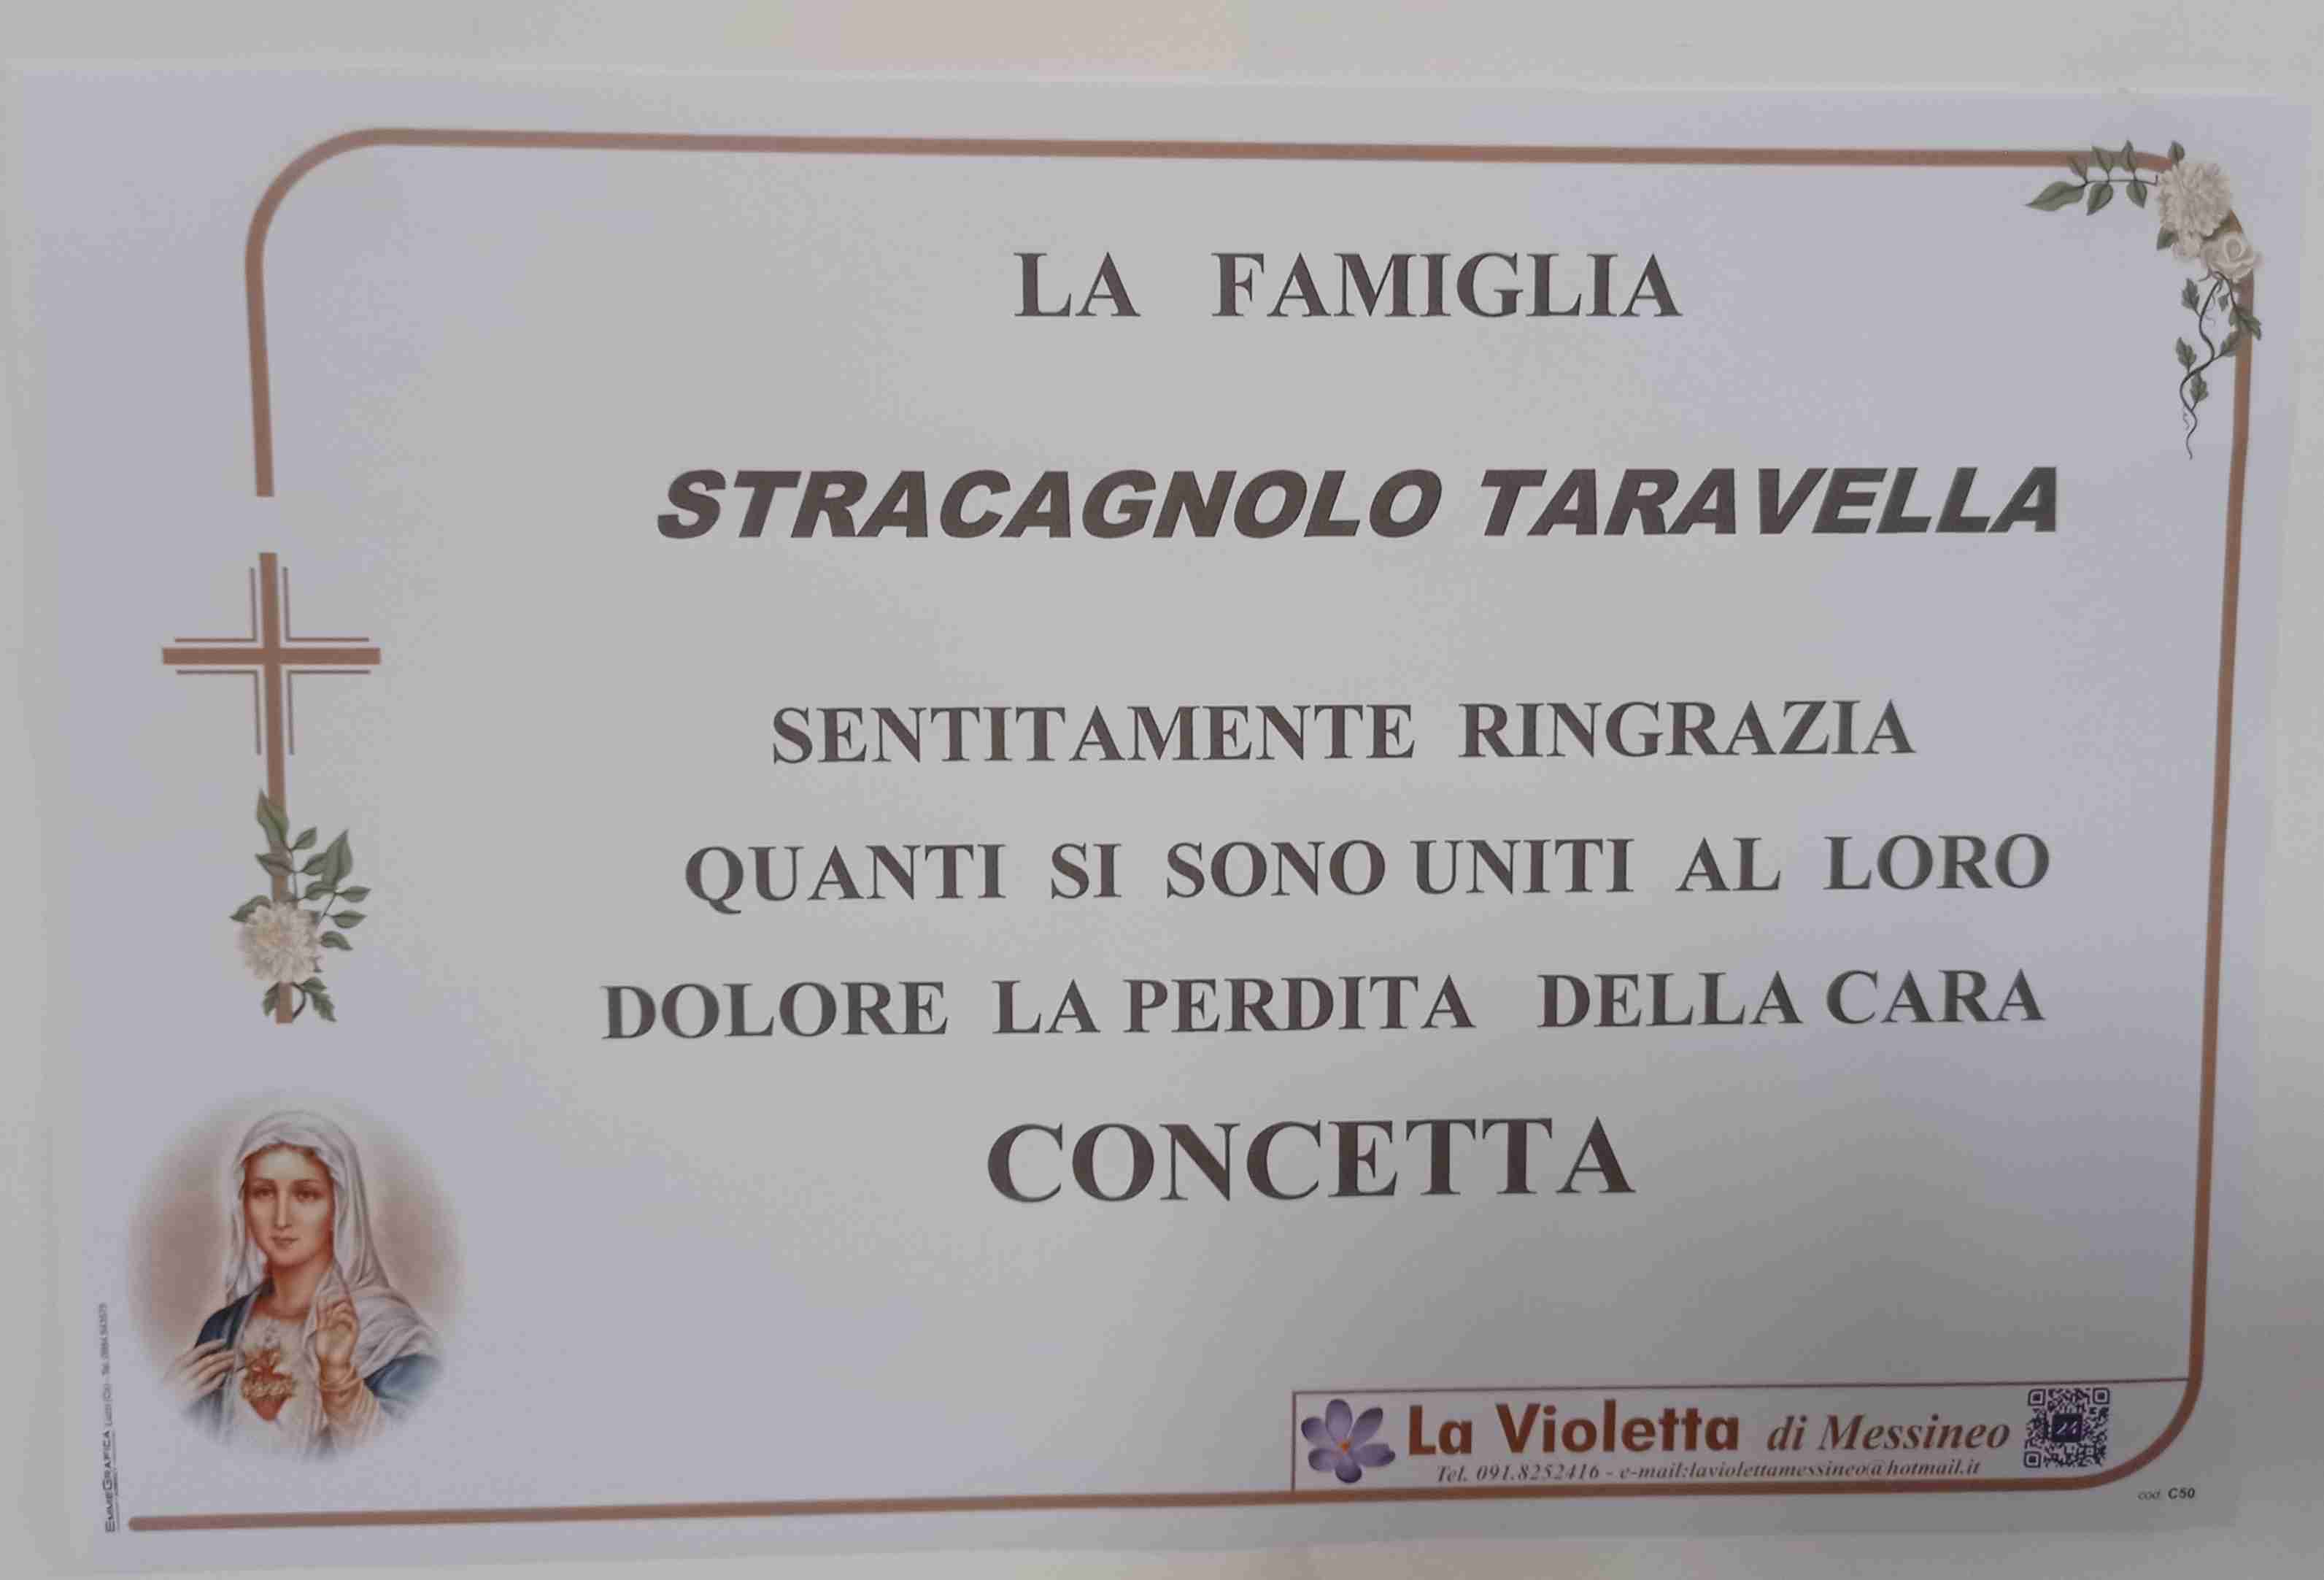 Taravella Concetta